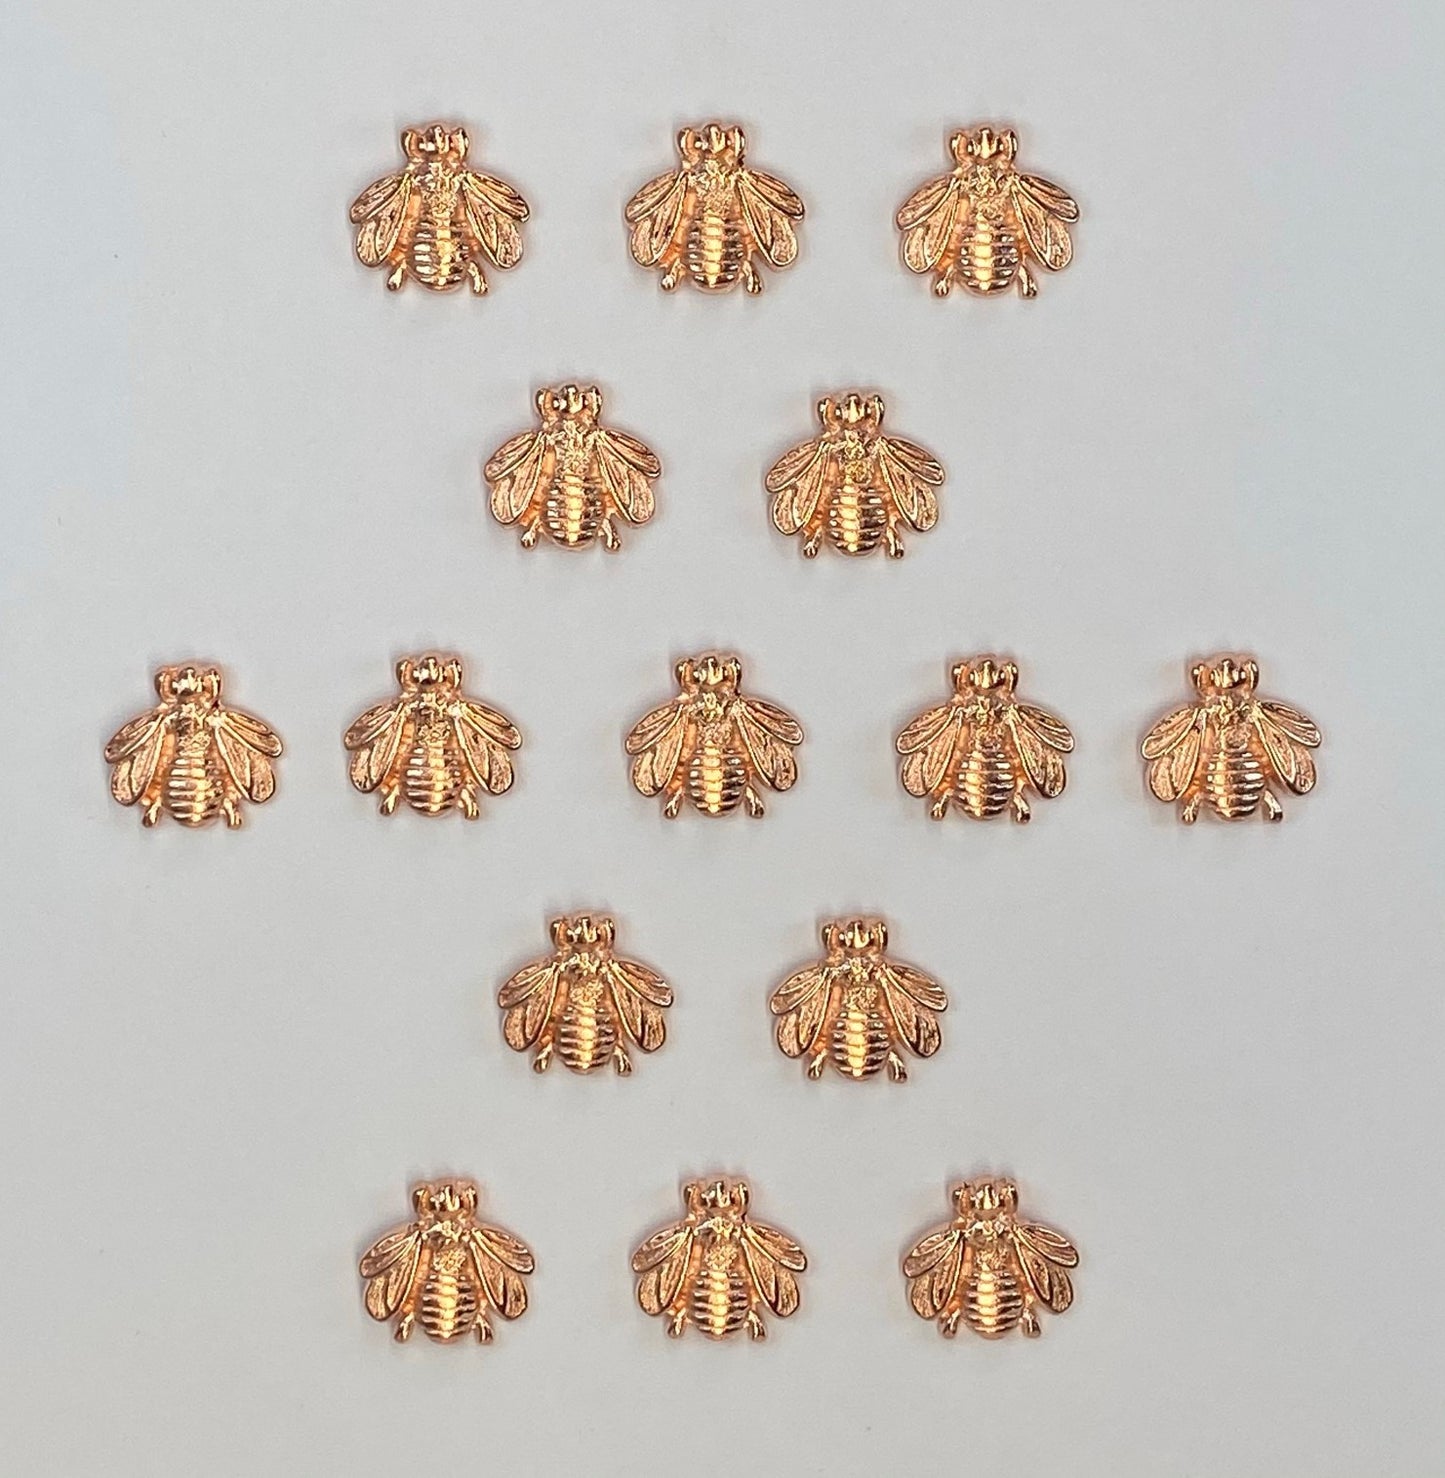 Bumble Bee Push Pins, Decorative Push Pins, Unique Rose Gold Push Pins, Metal Push Pin Set, 15 Pieces